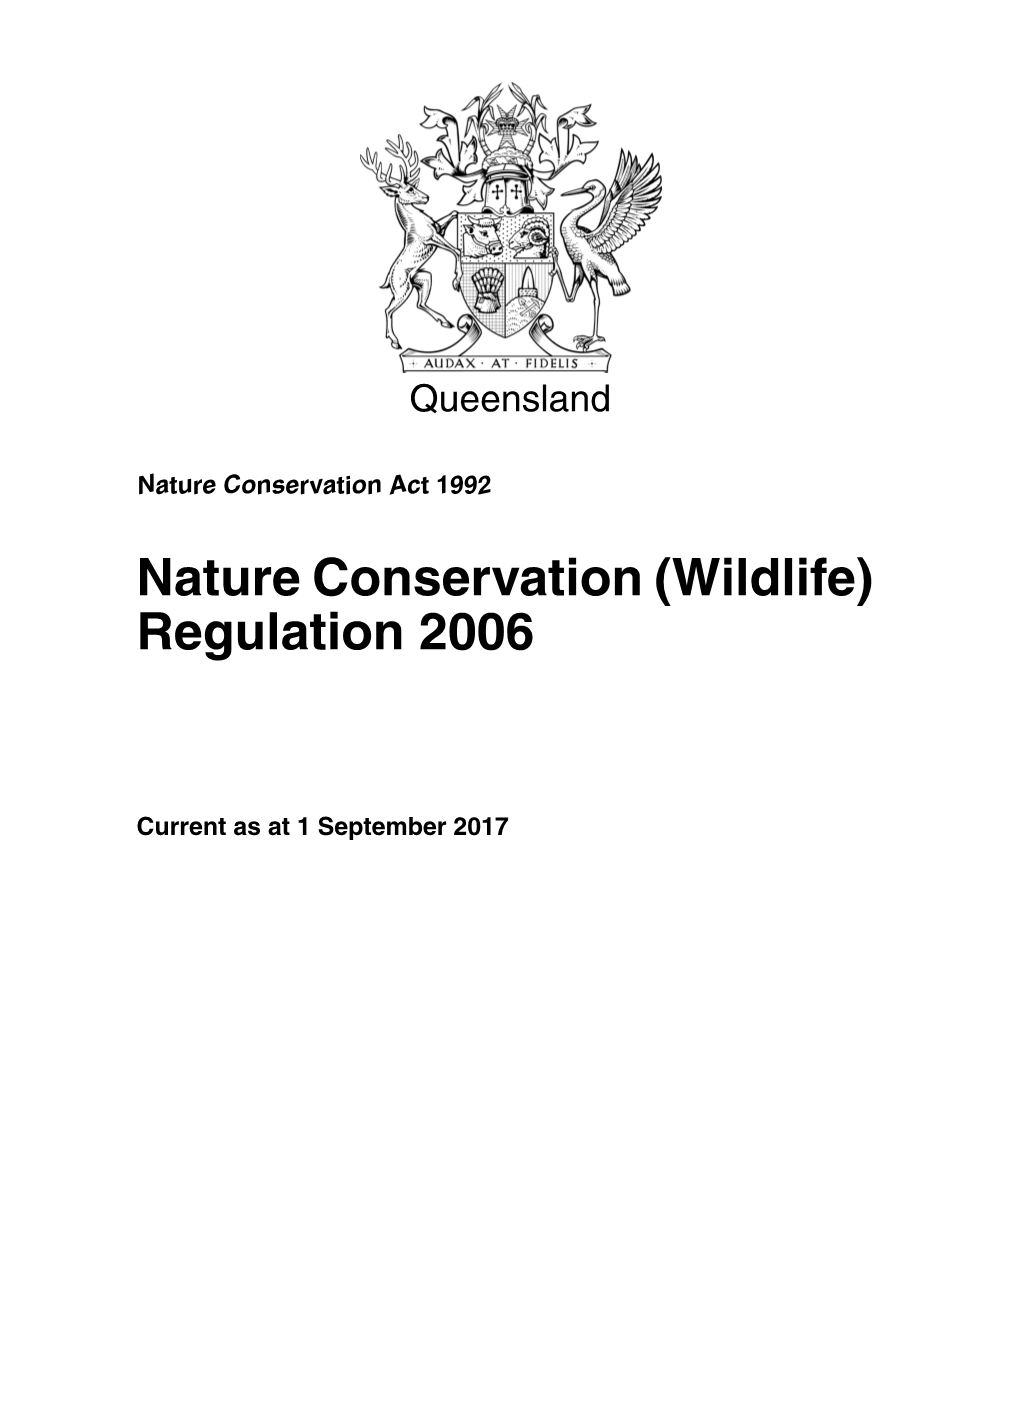 Nature Conservation (Wildlife) Regulation 2006